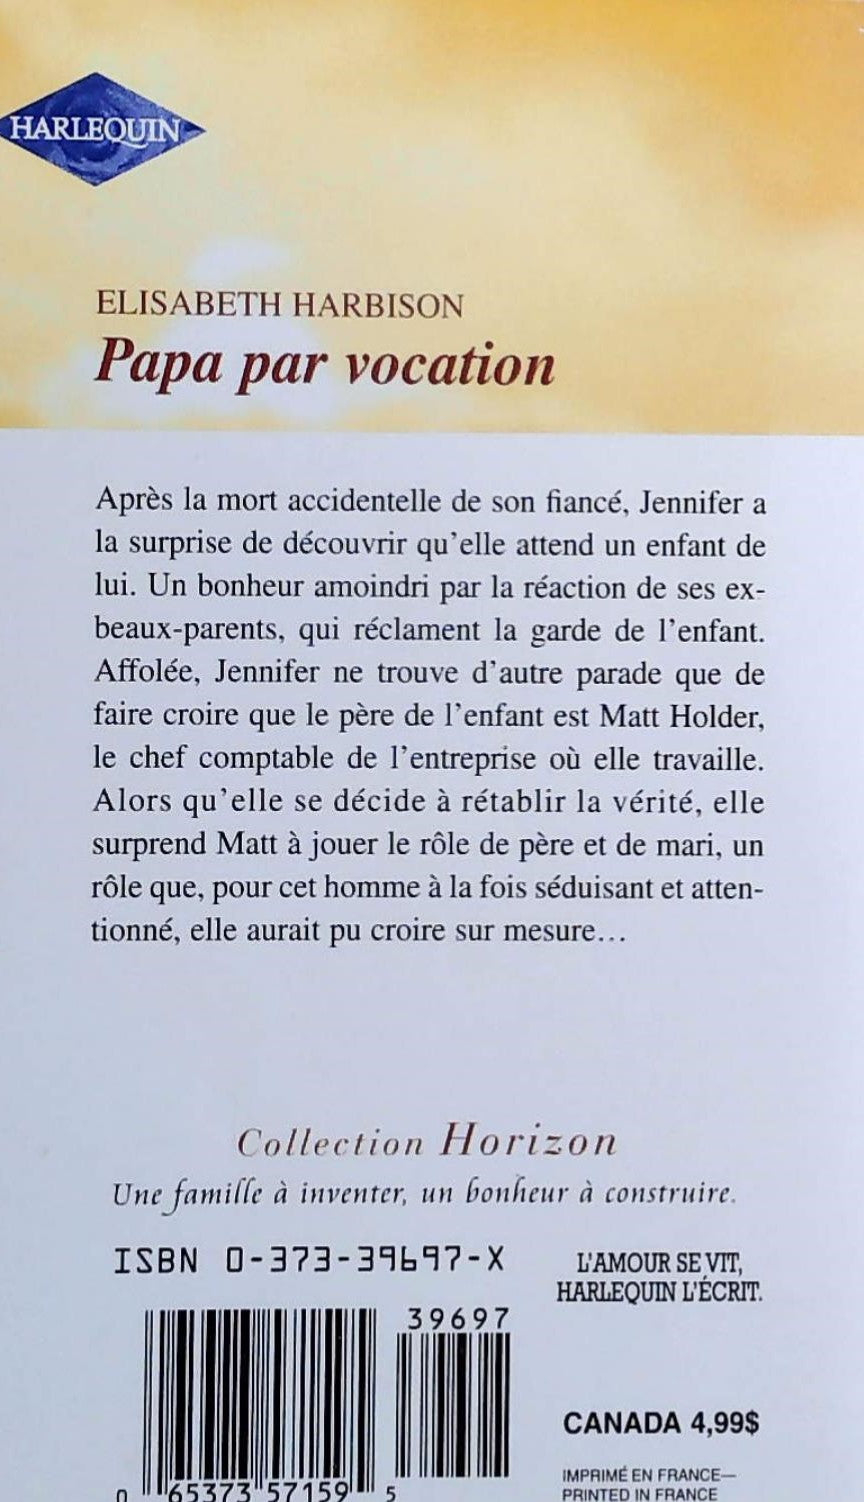 Horizon (Harlequin) # 697 : Papa par vocation (Elizabeth Harbison)